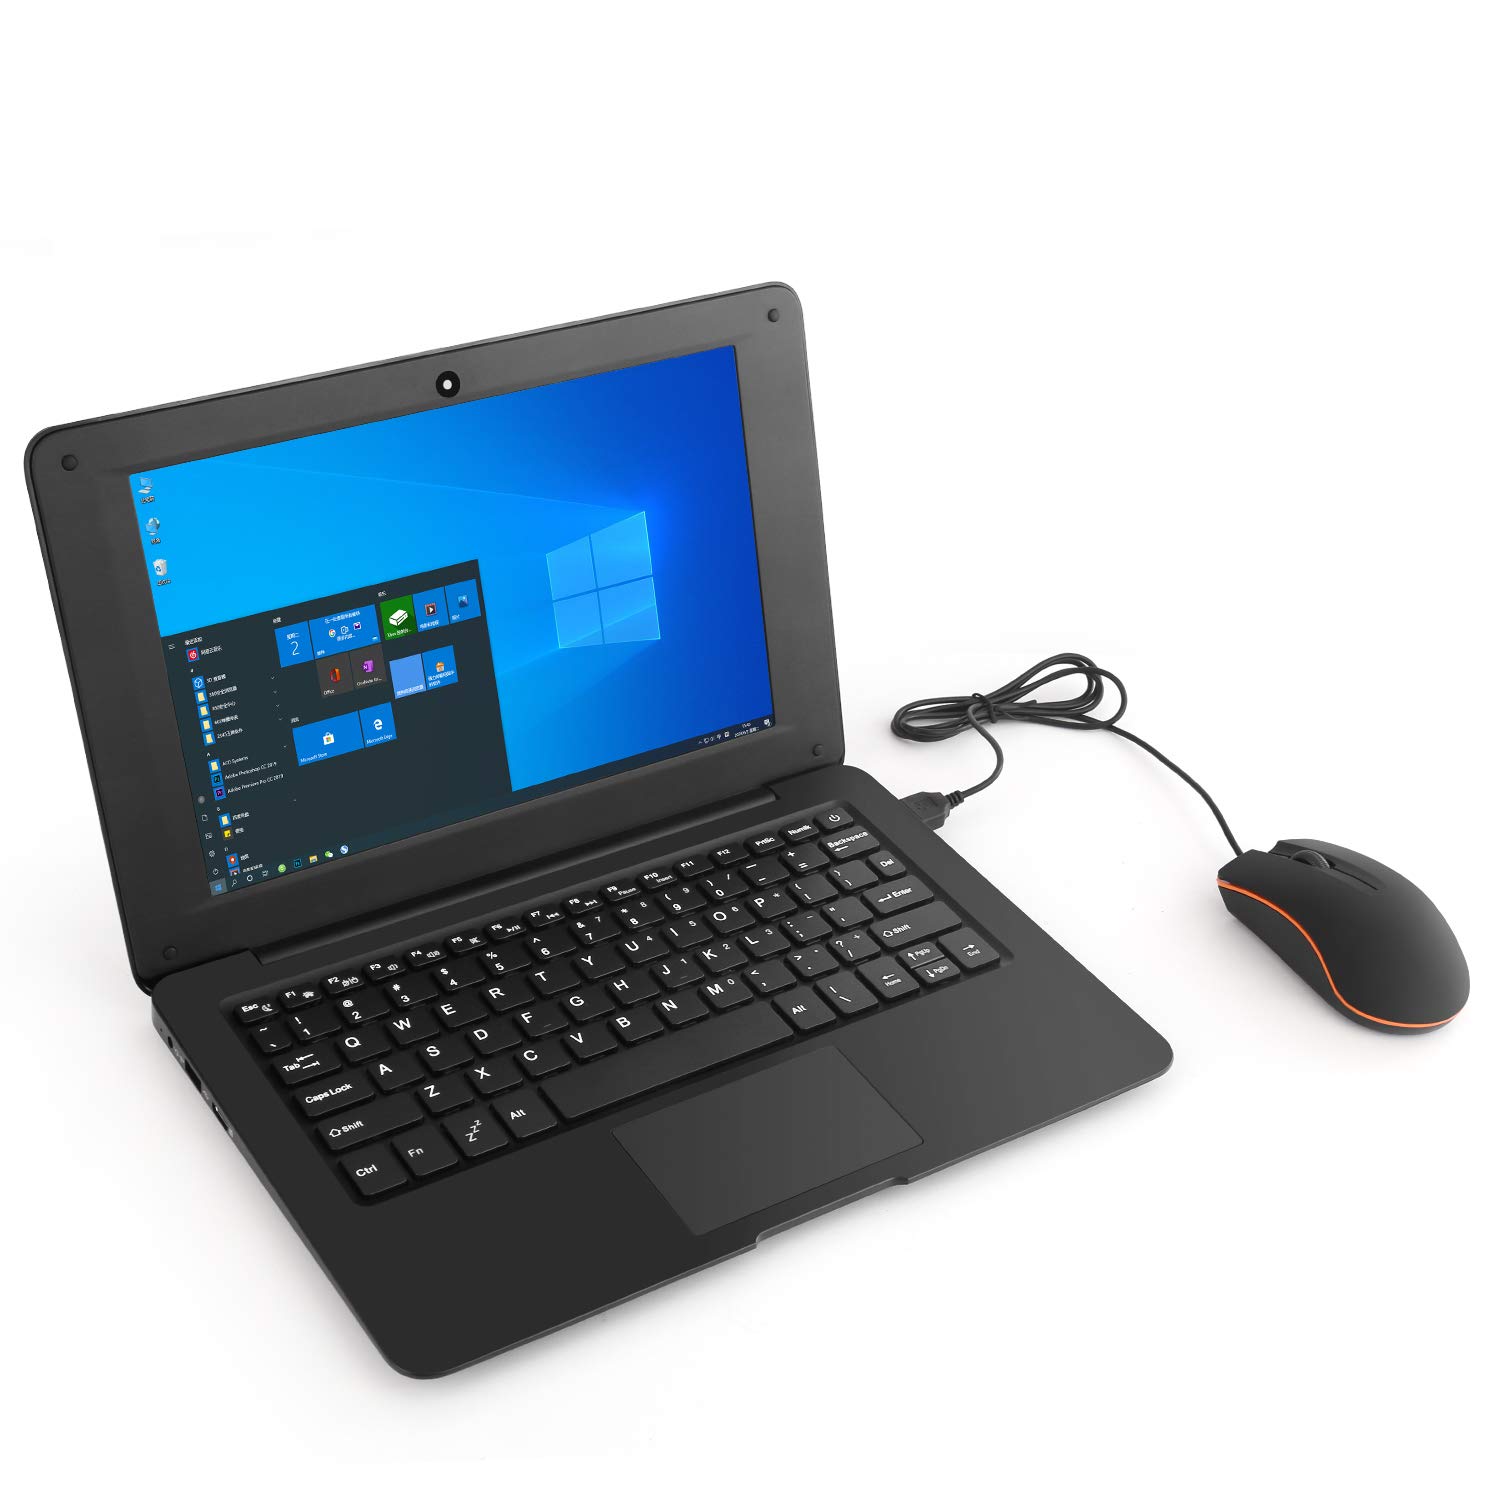 Goldengulf Windows 10 Computer Laptop Mini 10.1 Inch 32GB Ultra Thin and Light Netbook Intel Quad Core CPU PC HDMI WiFi USB Netflix YouTube (Black)